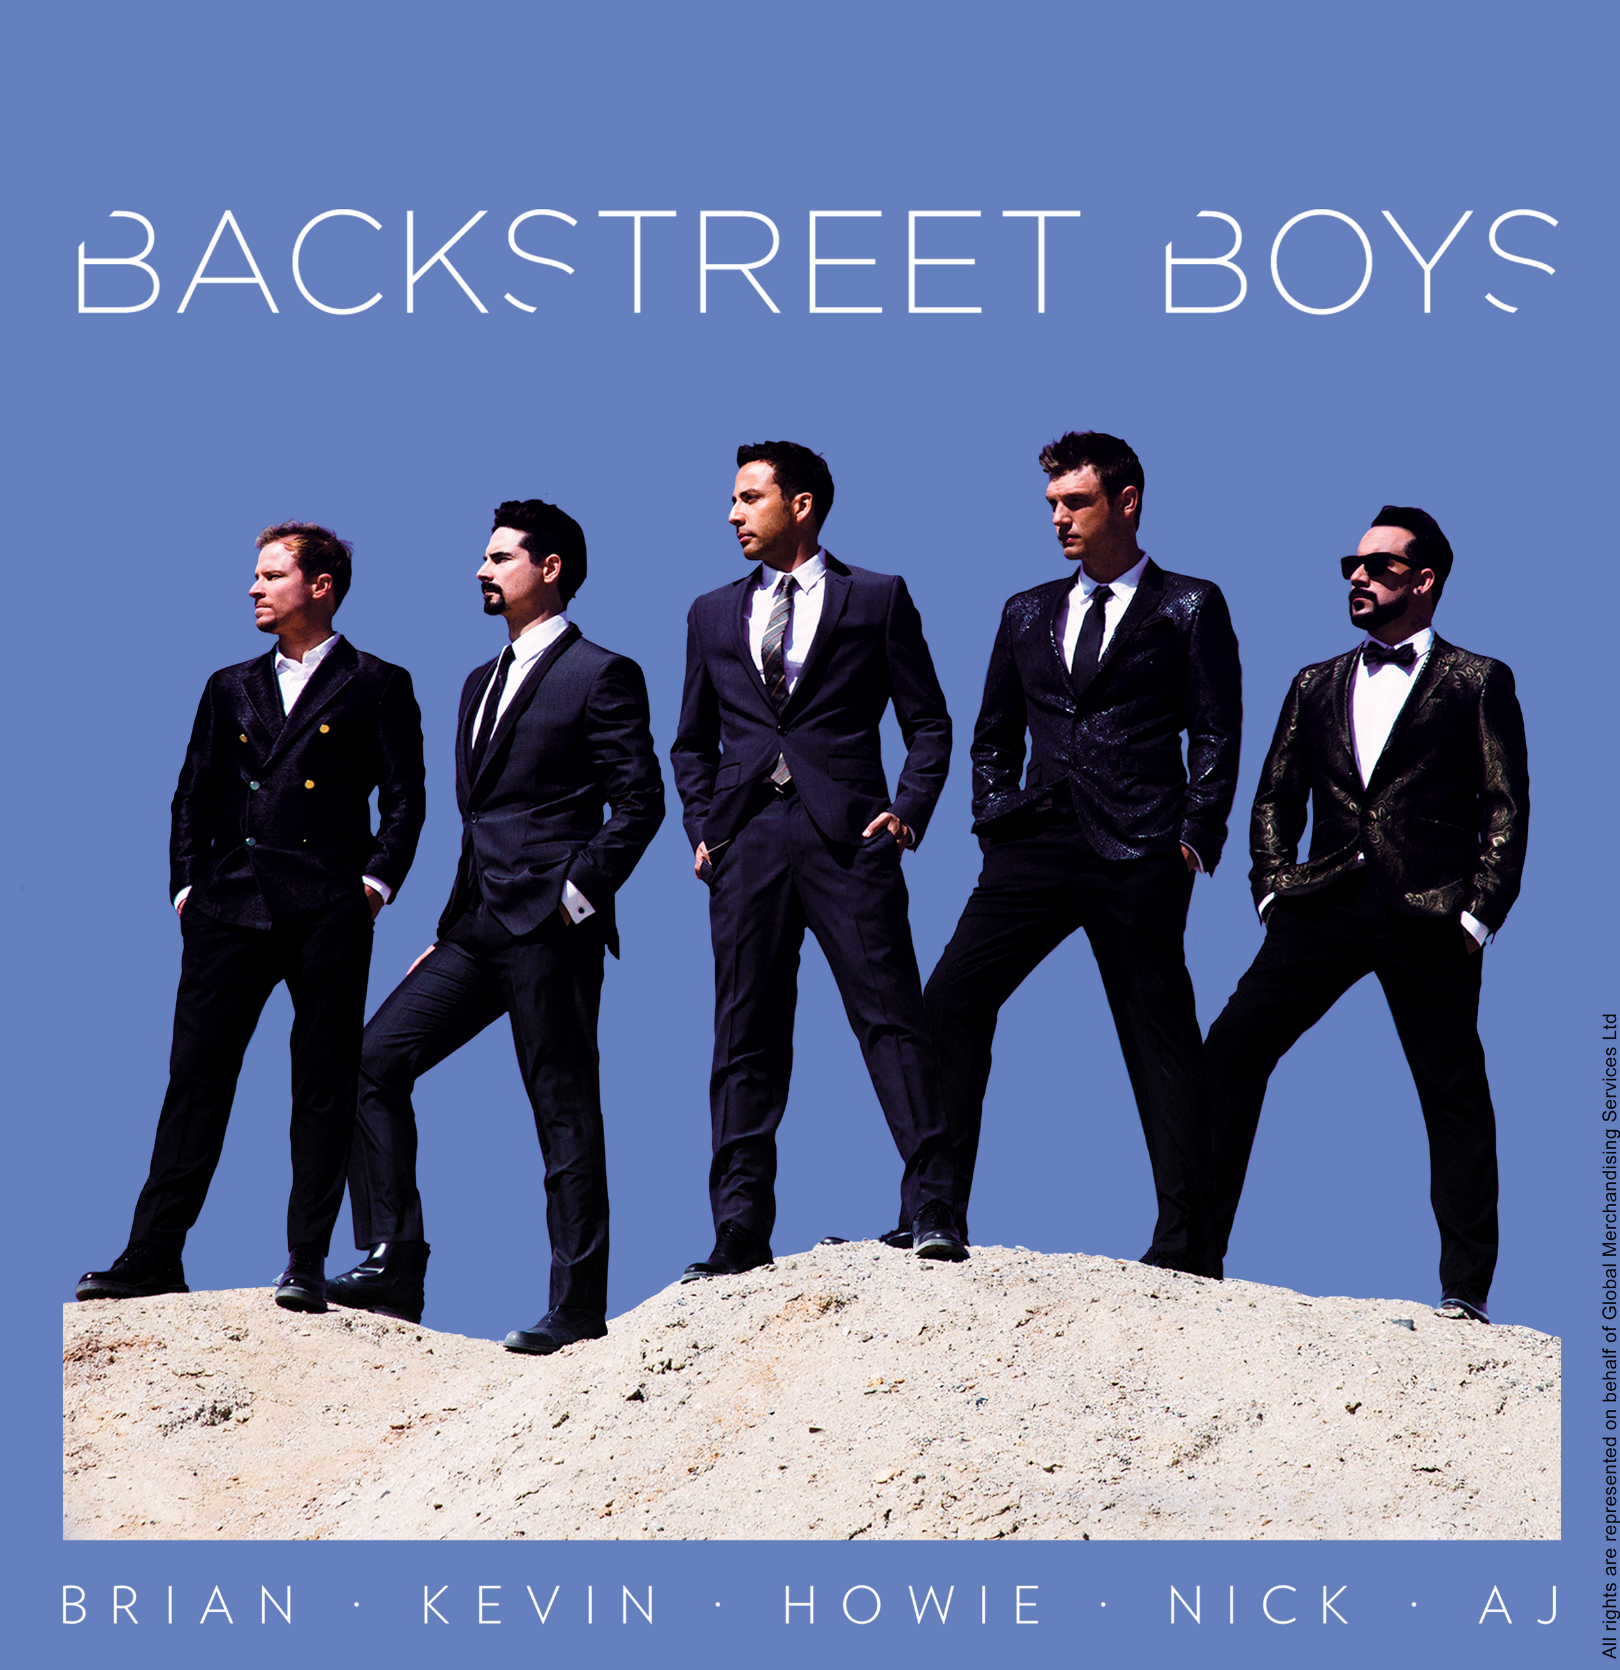 World like 5. Backstreet boys album. Backstreet boys обложка. Backstreet boys альбомы. Backstreet boys album Cover.